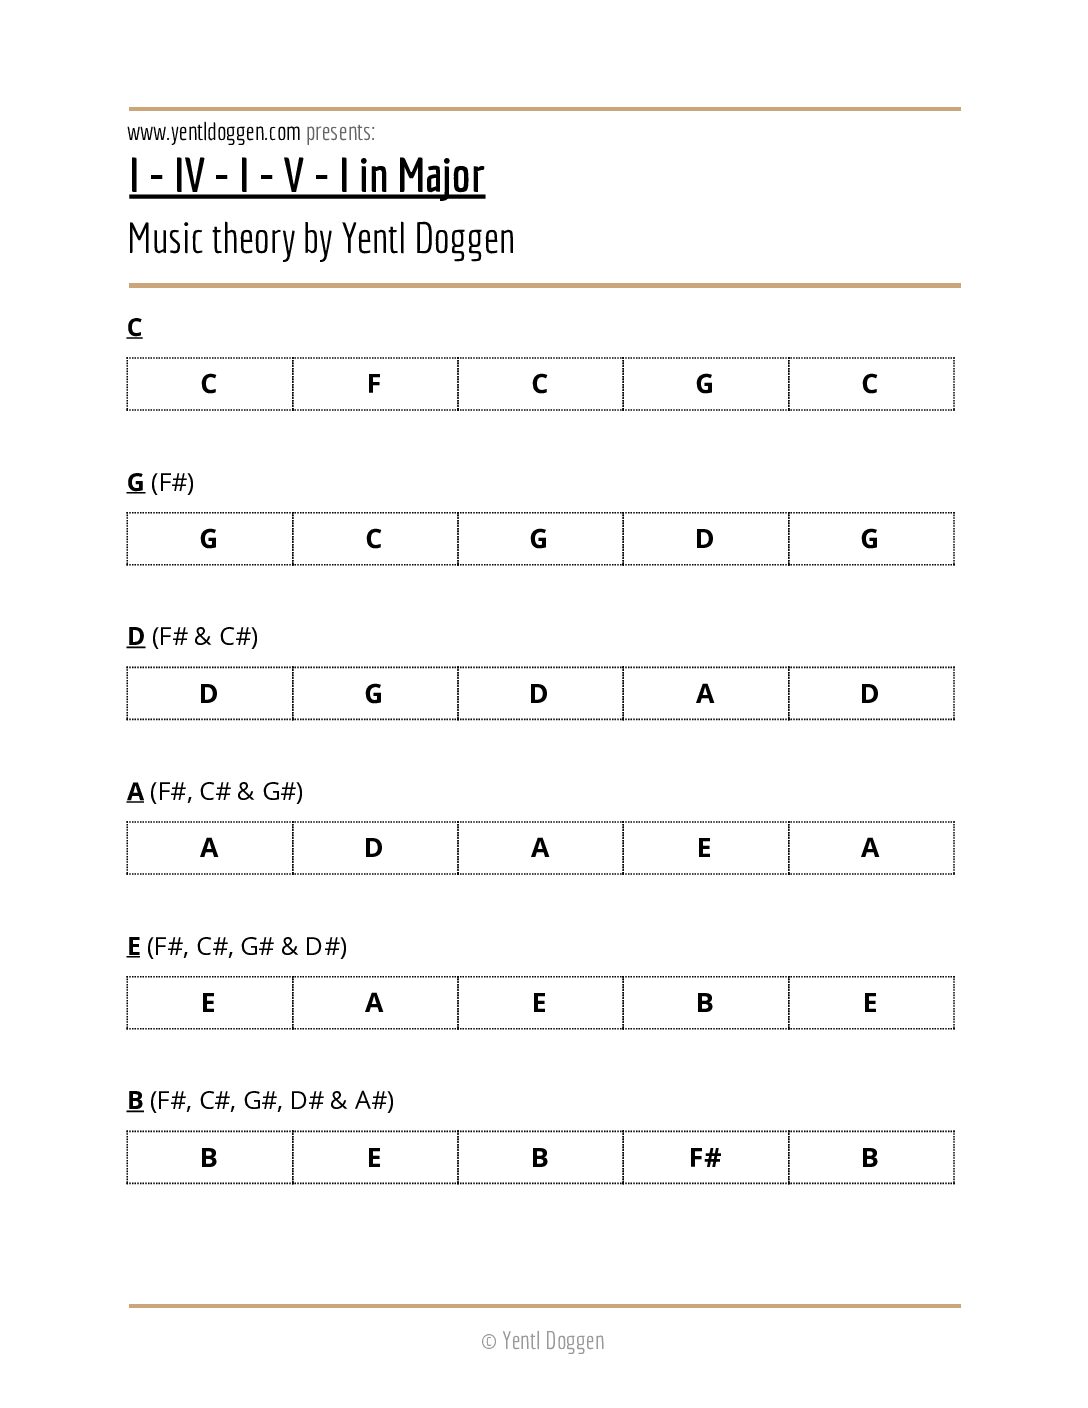 PDF for the I - IV - I - V - I chords cheat sheet